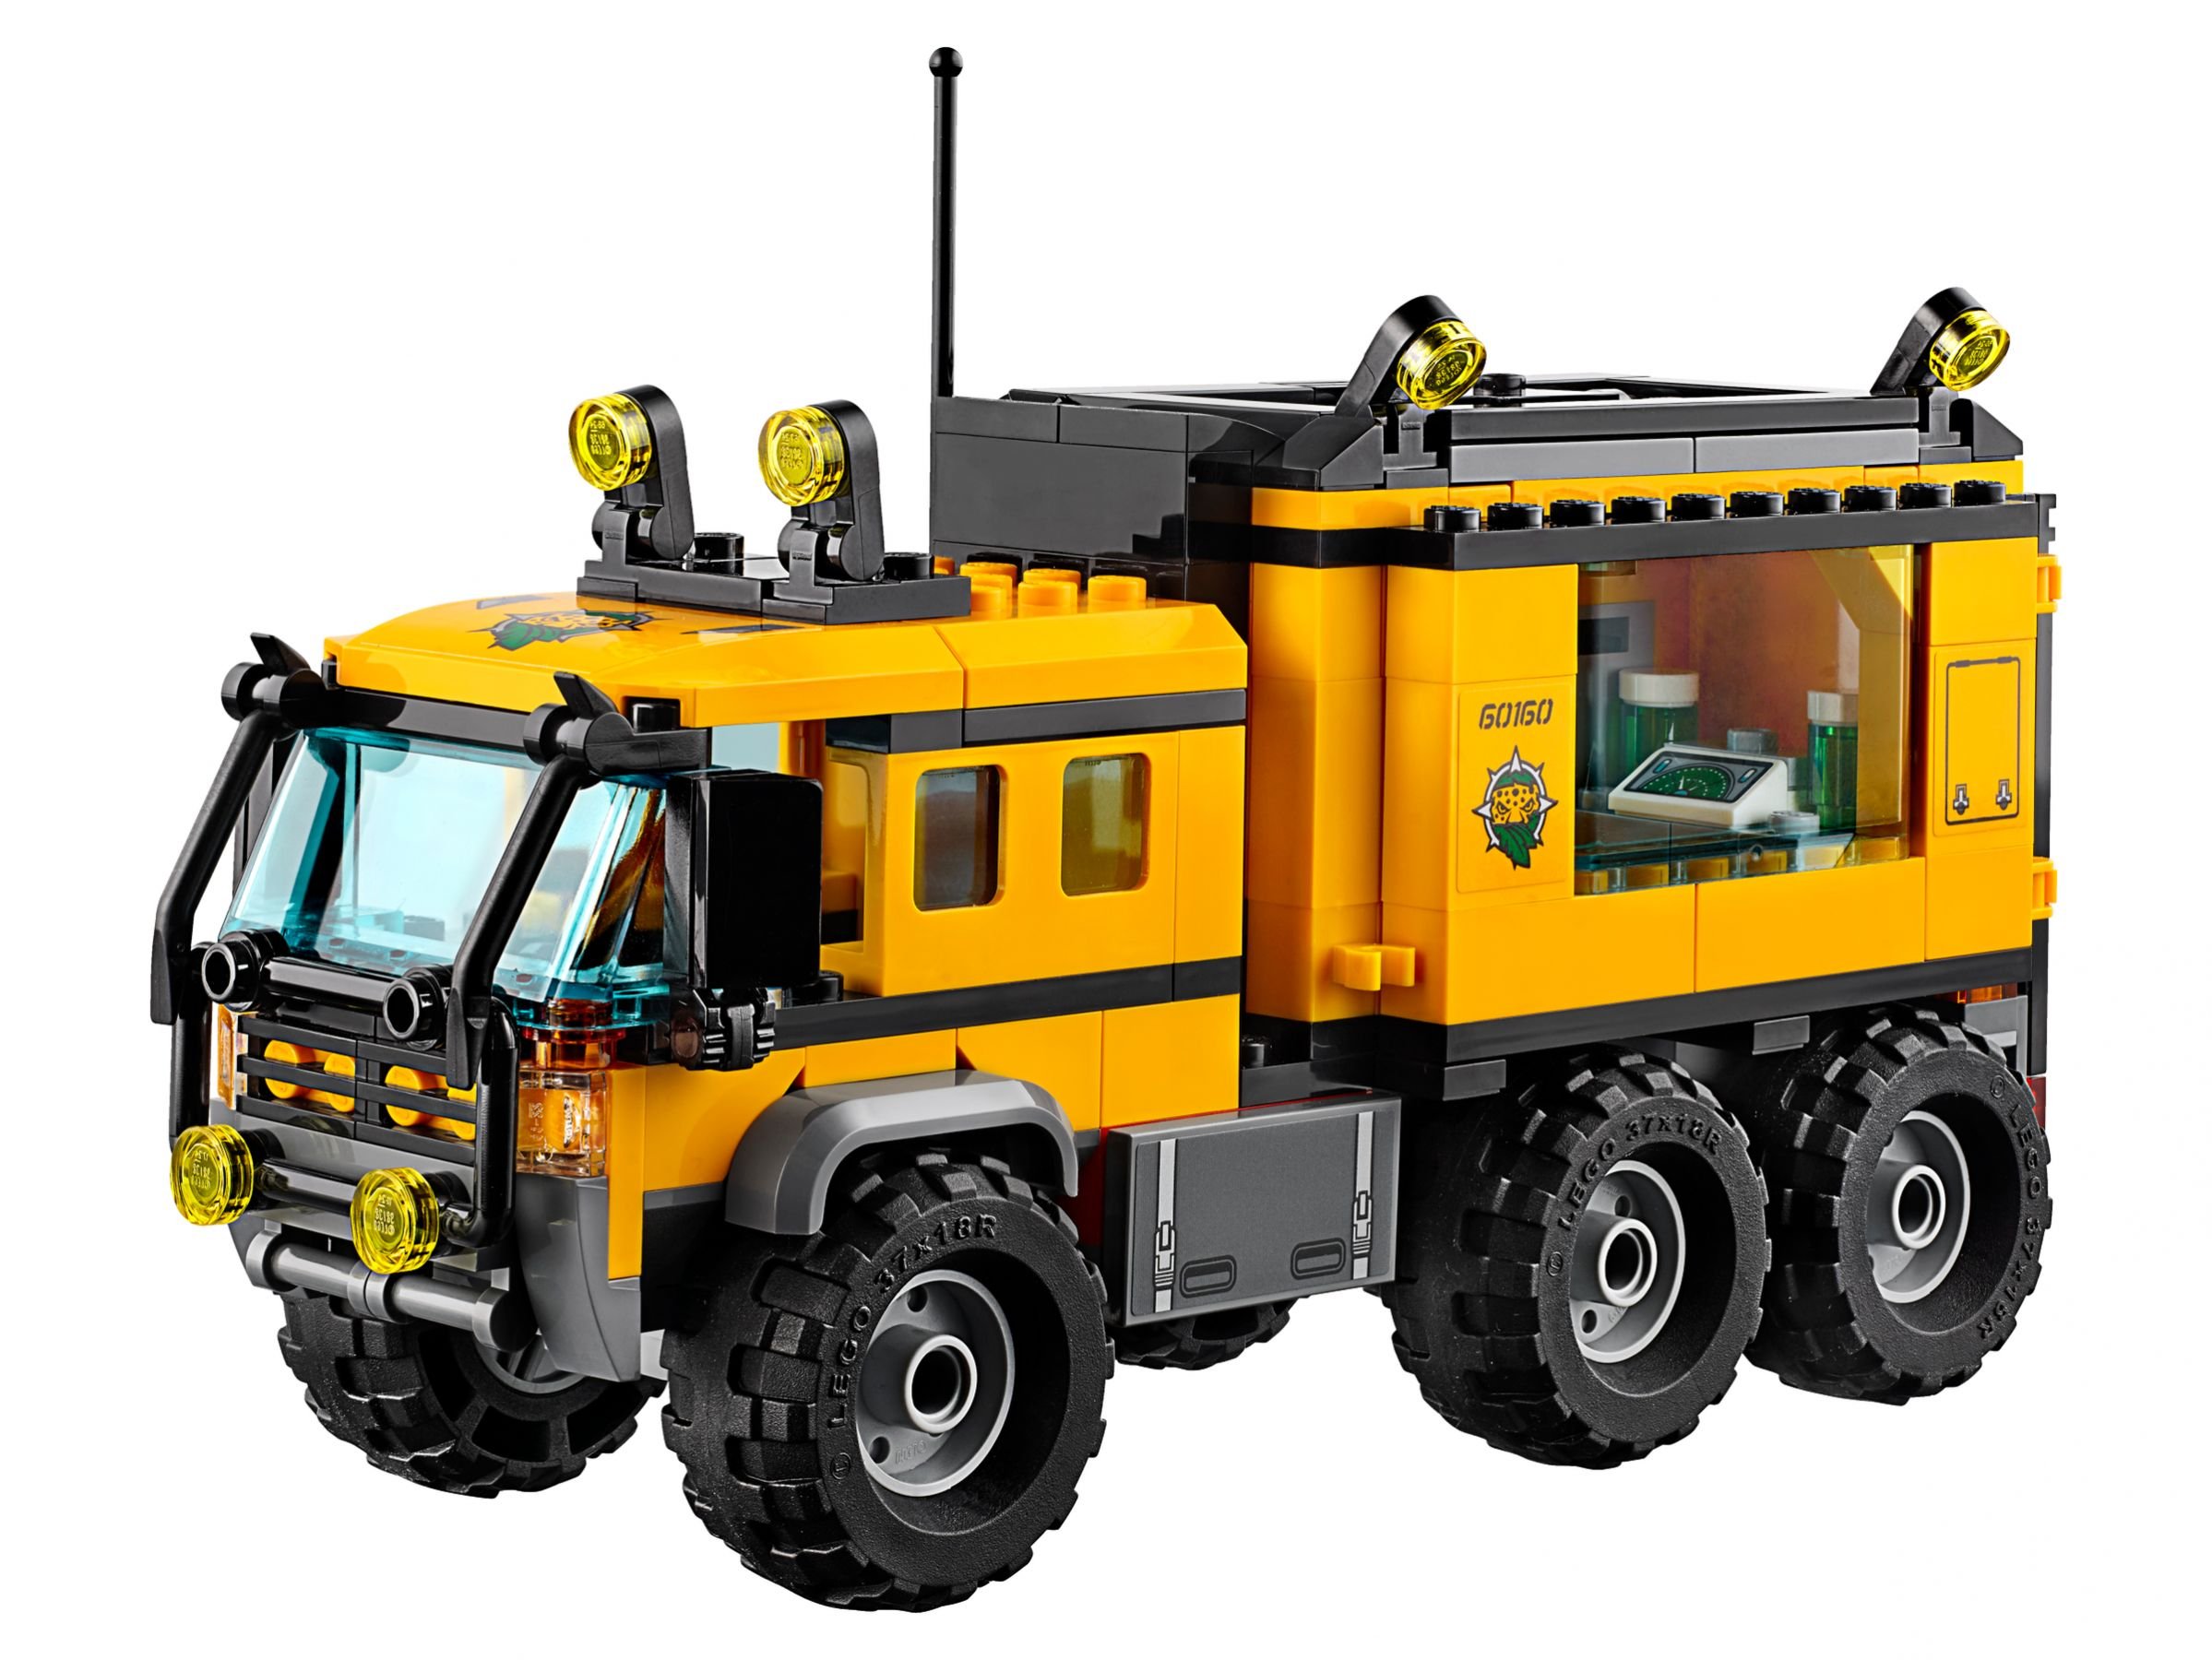 LEGO City 60160 Mobiles Dschungel-Labor LEGO_60160_alt2.jpg